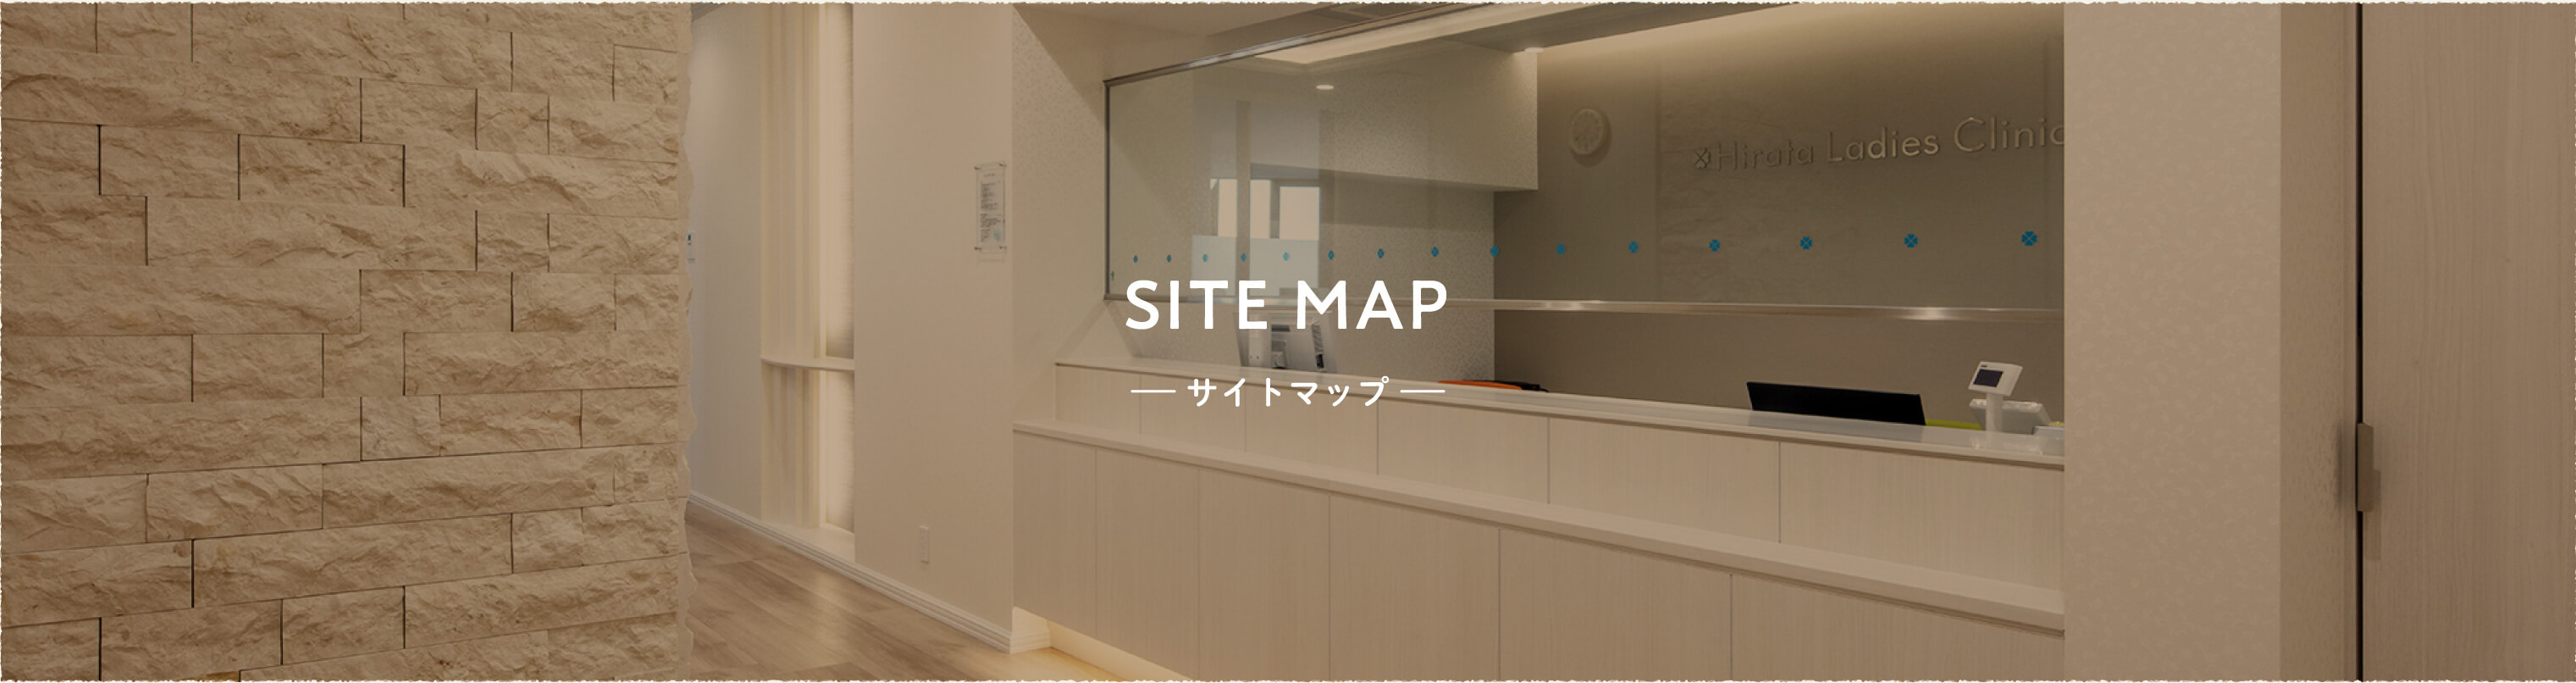 SITEMAP —サイトマップ—